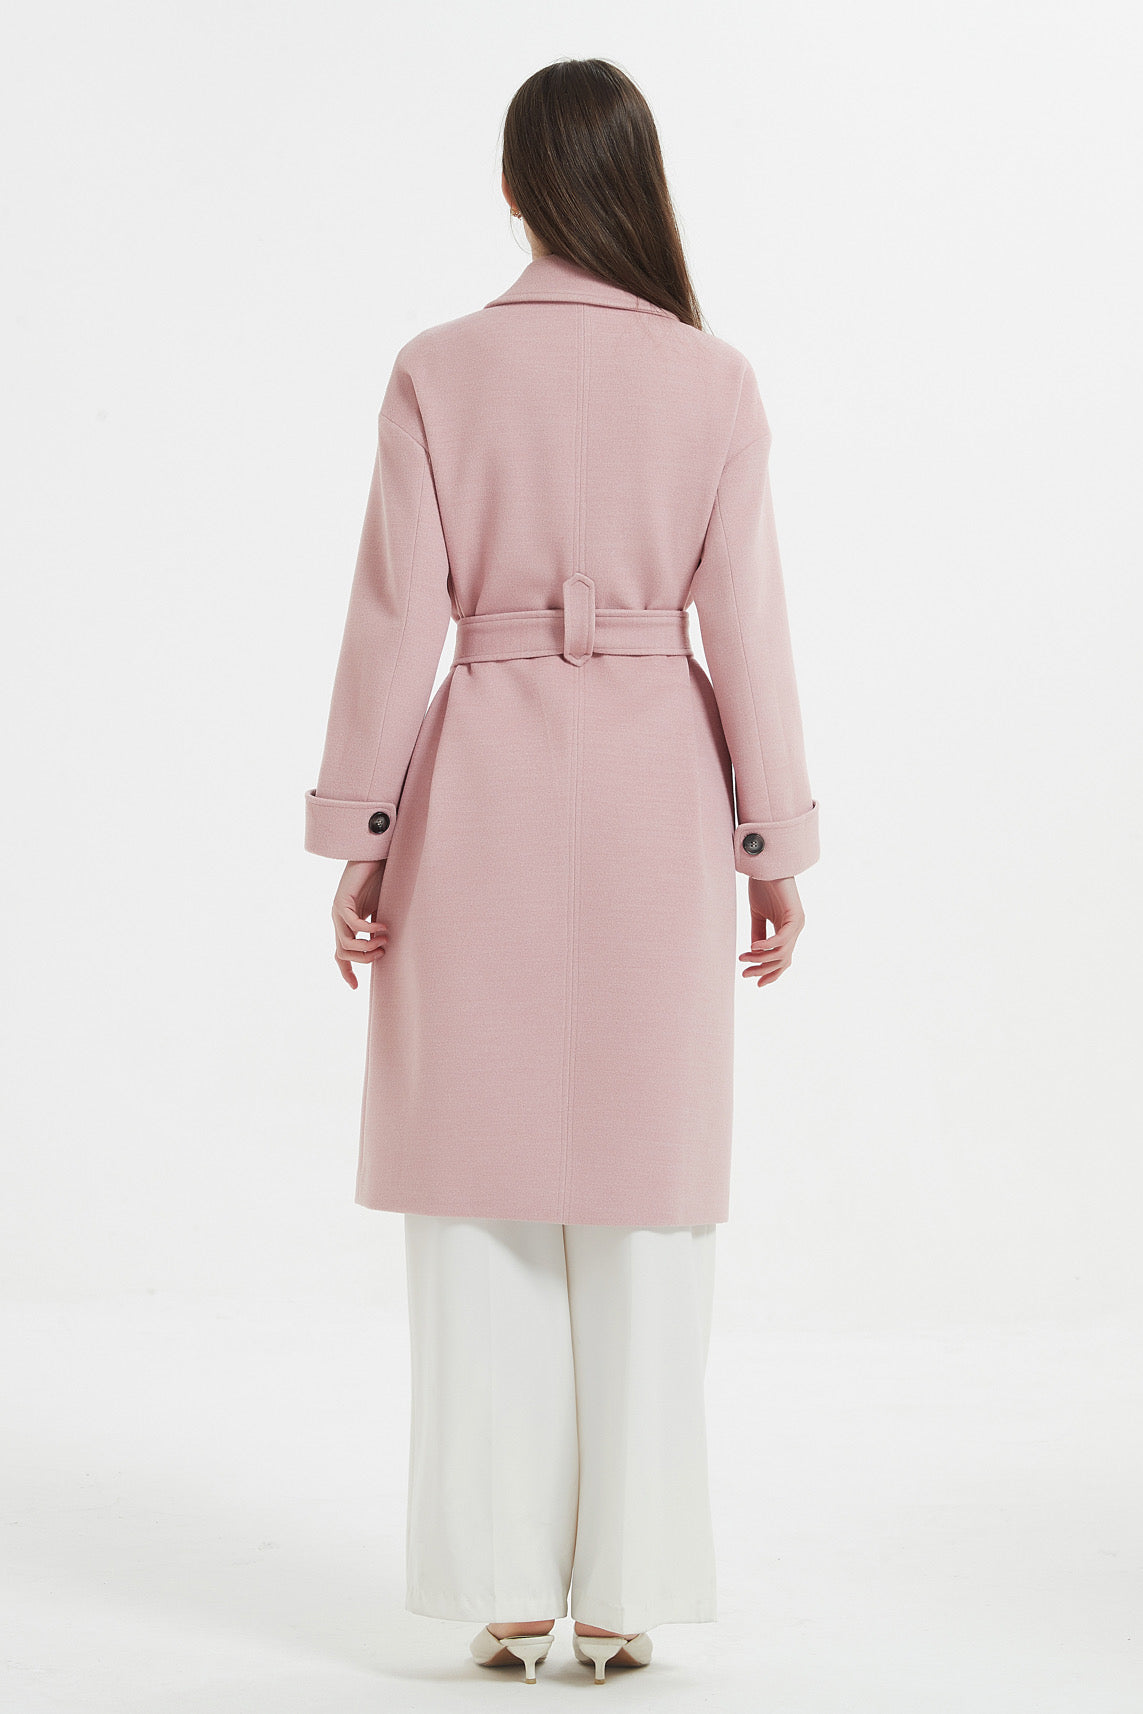 SKYE Shop Chic Modern Elegant Timeless Women Clothing French Parisian Minimalist Annabelle Long Wool Coat Pink 6